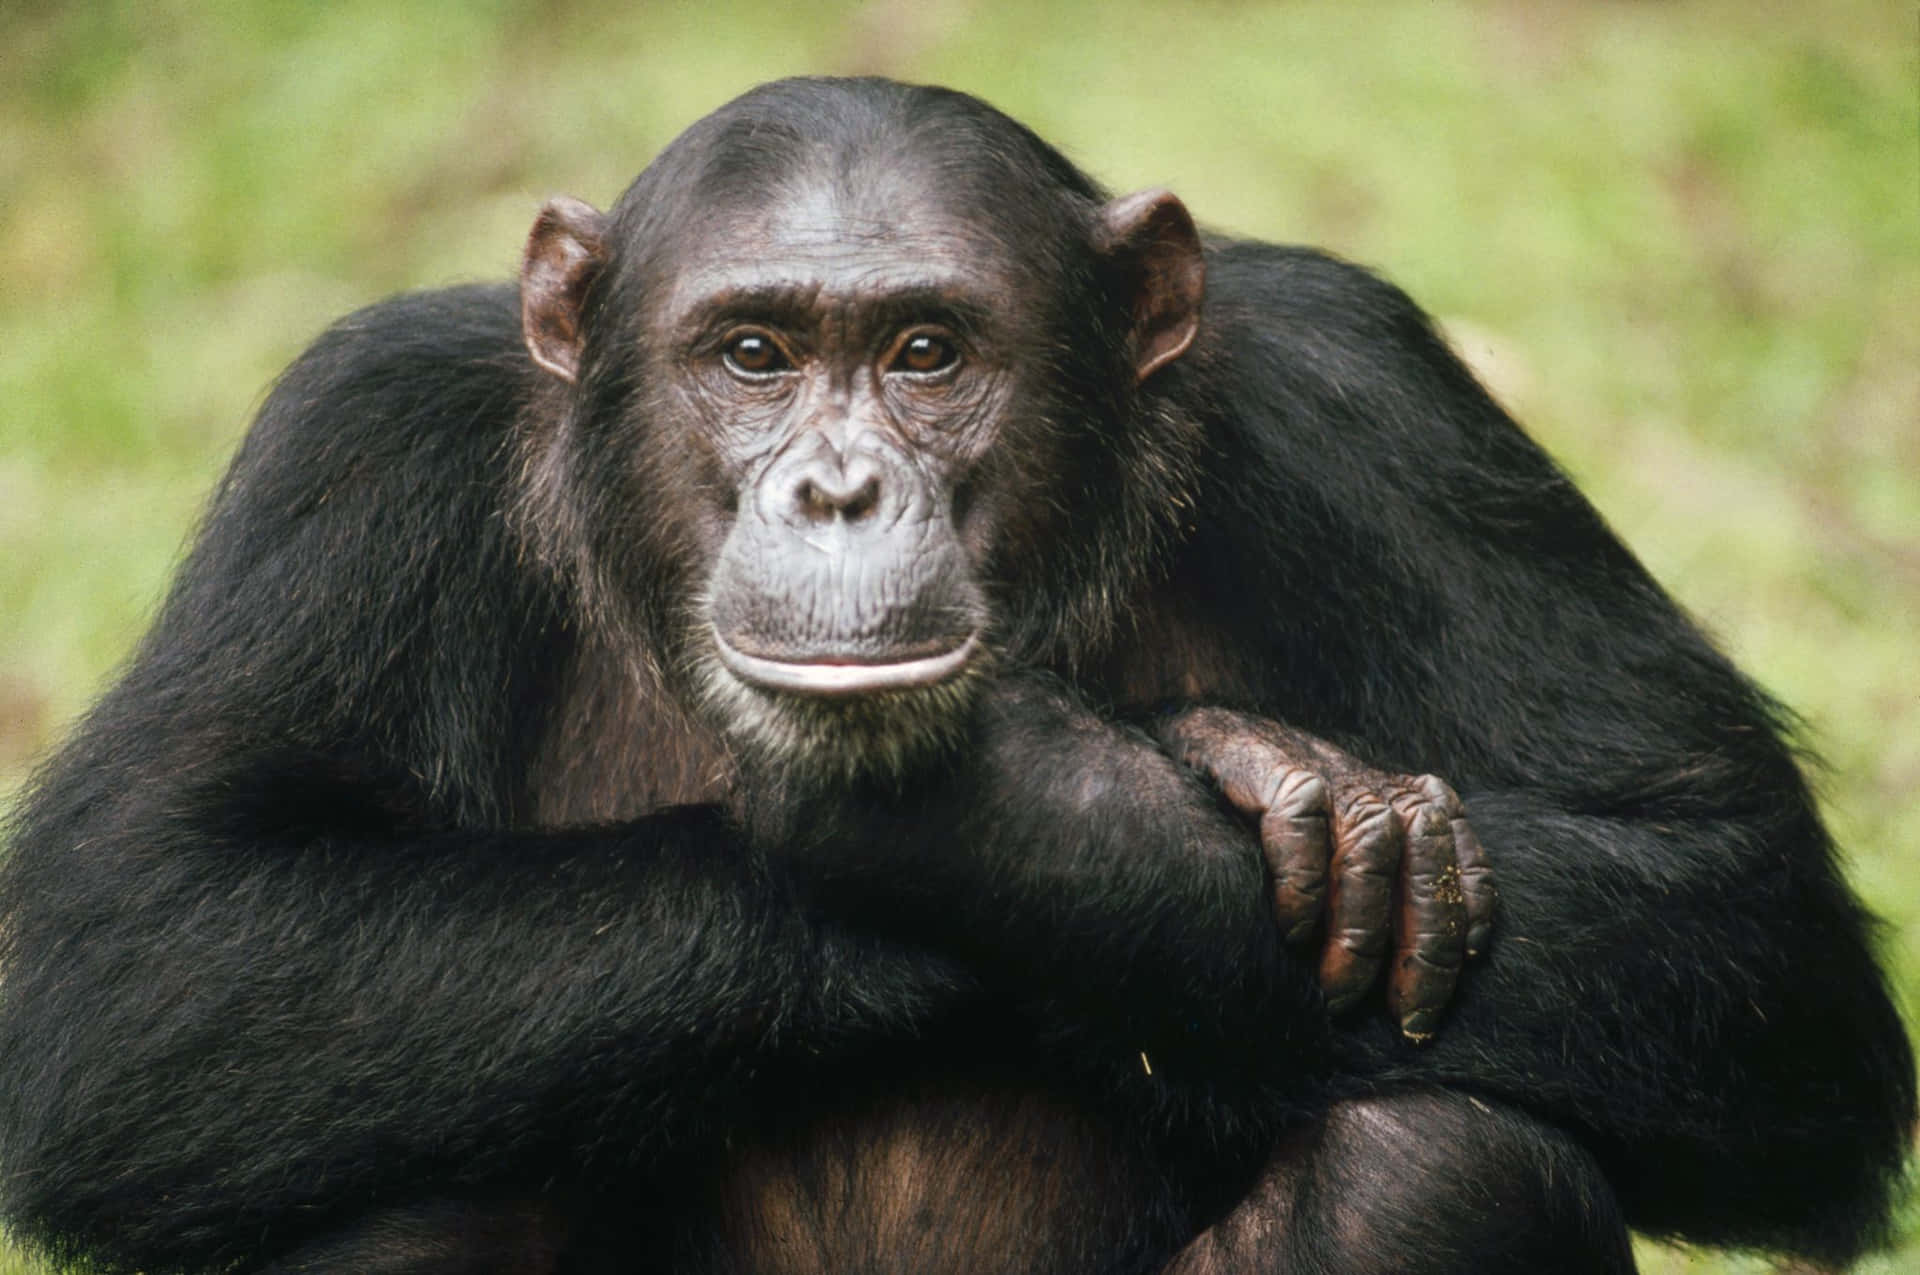 Image  A chimpanzee in its natural habitat